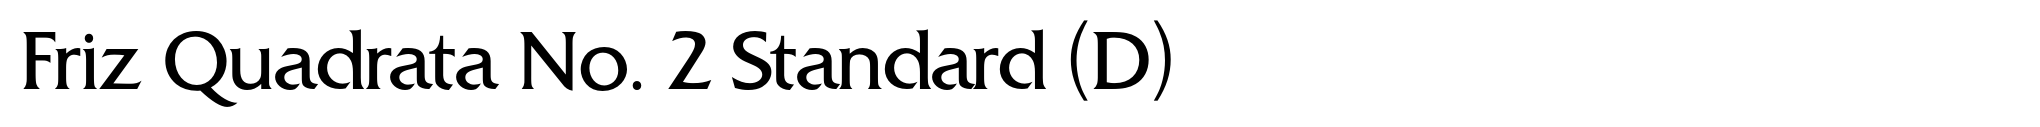 Friz Quadrata No. 2 Standard (D) image